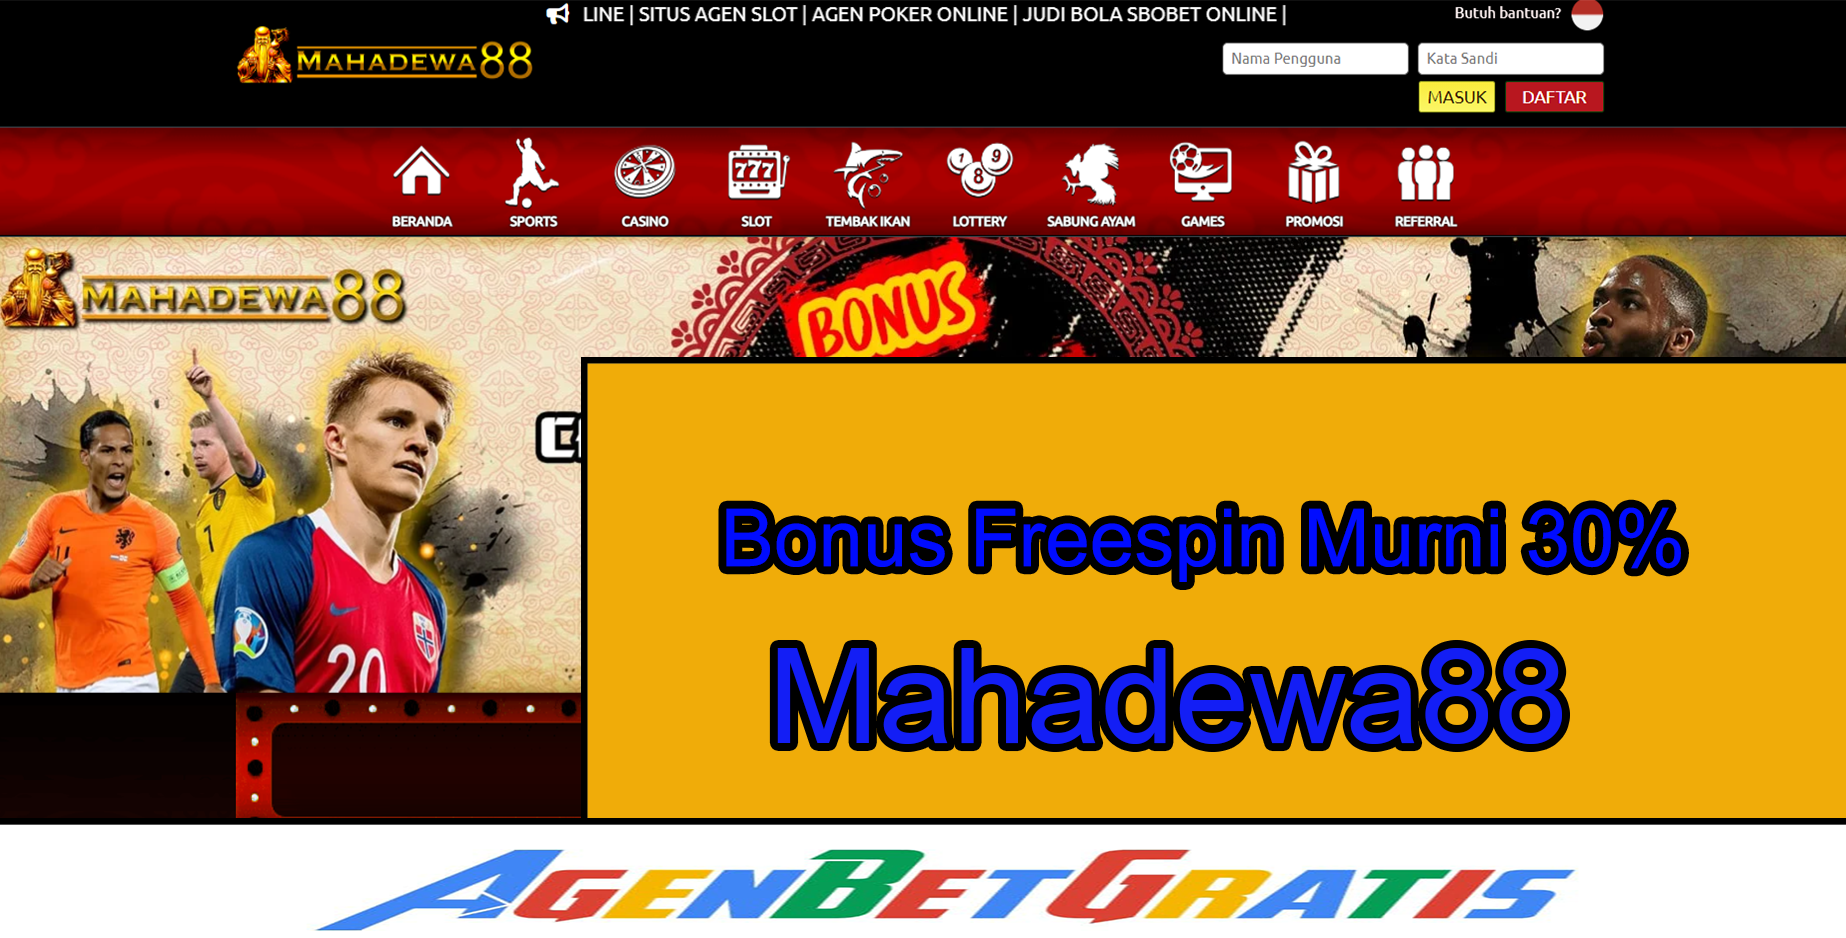 MAHADEWA88 - Bonus Freespin Murni 30%